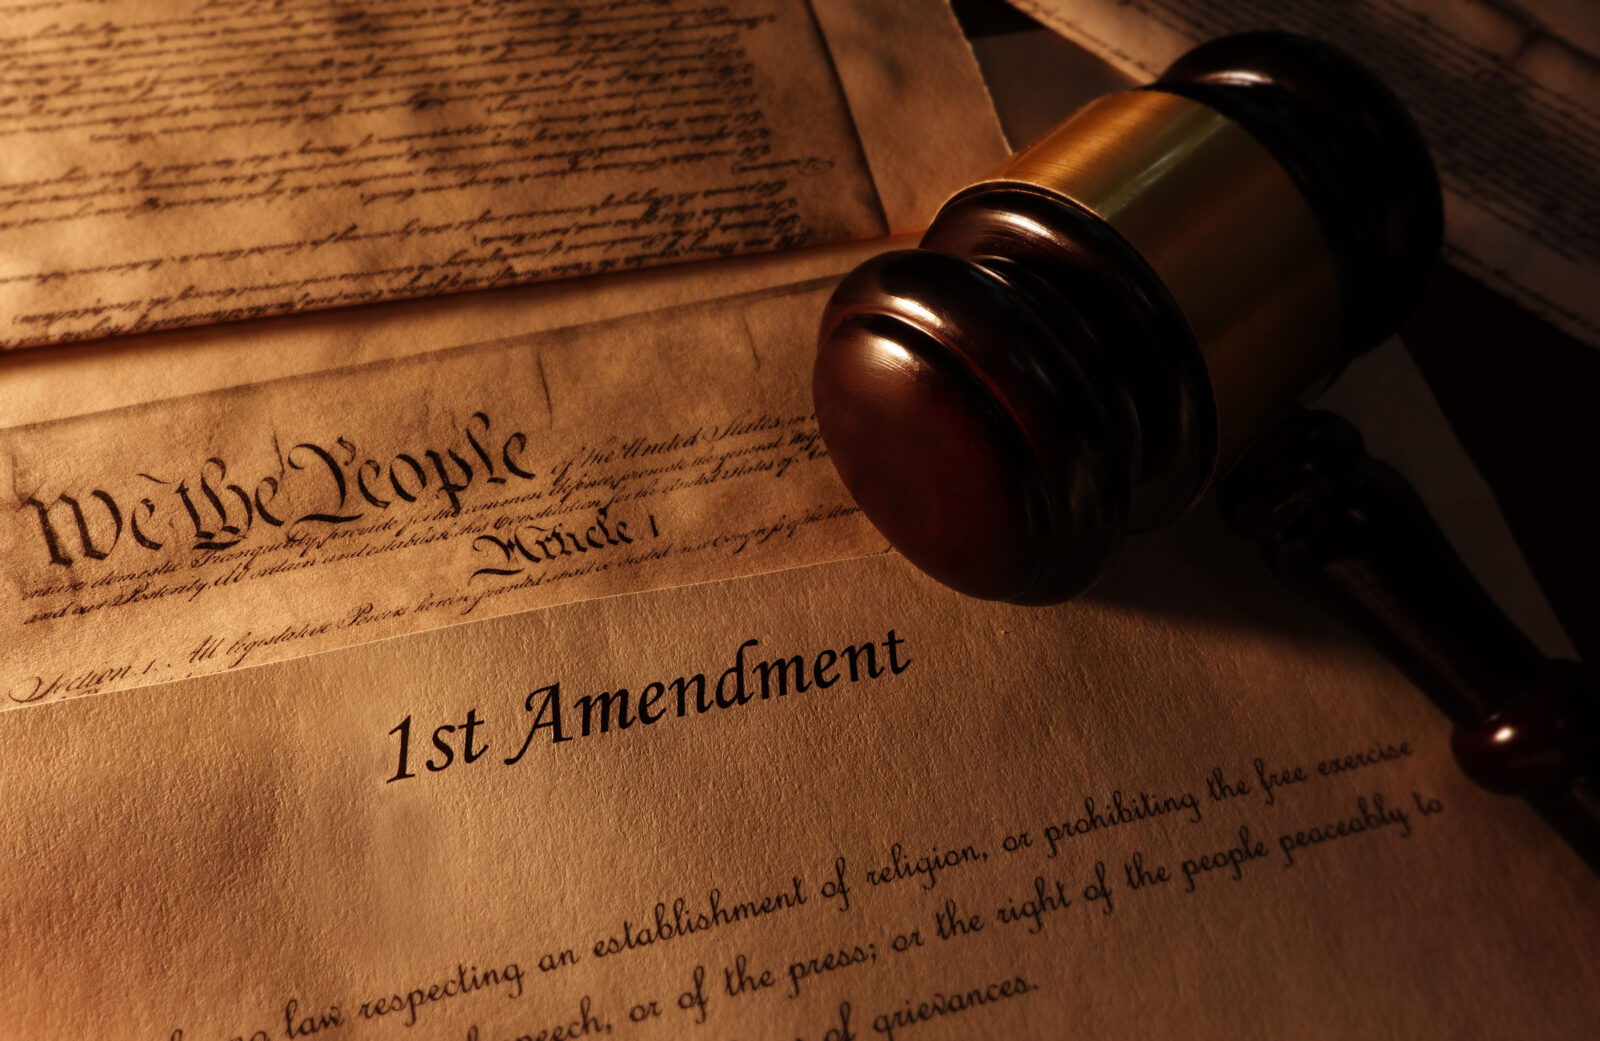 First Amendment text and gavel